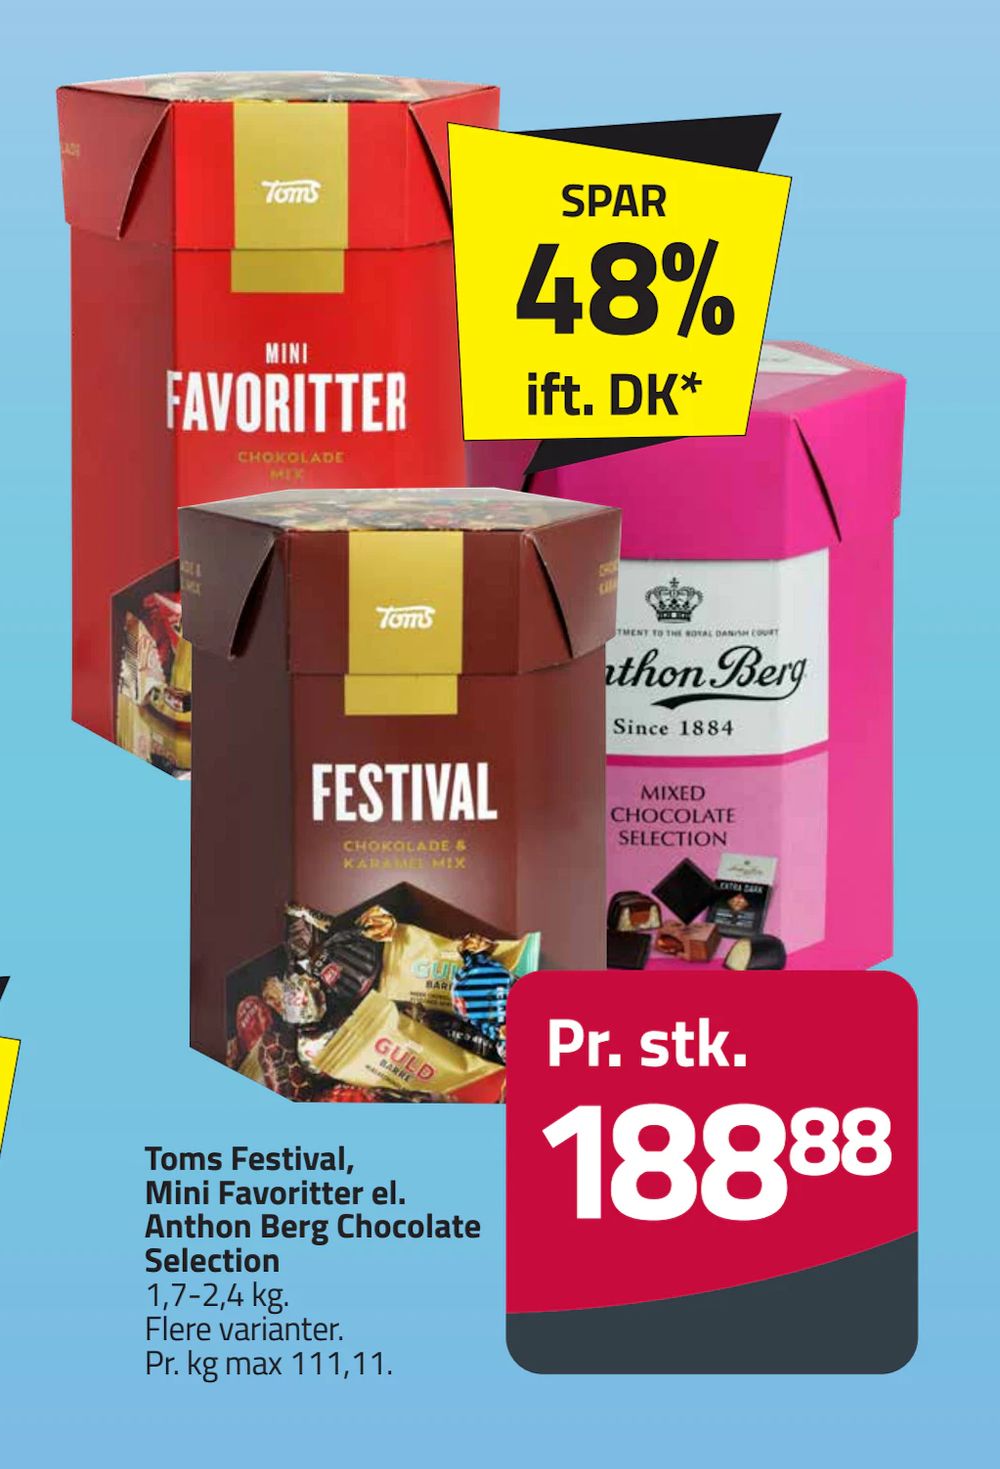 Tilbud på Toms Festival, Mini Favoritter el. Anthon Berg Chocolate Selection fra Fleggaard til 188,88 kr.